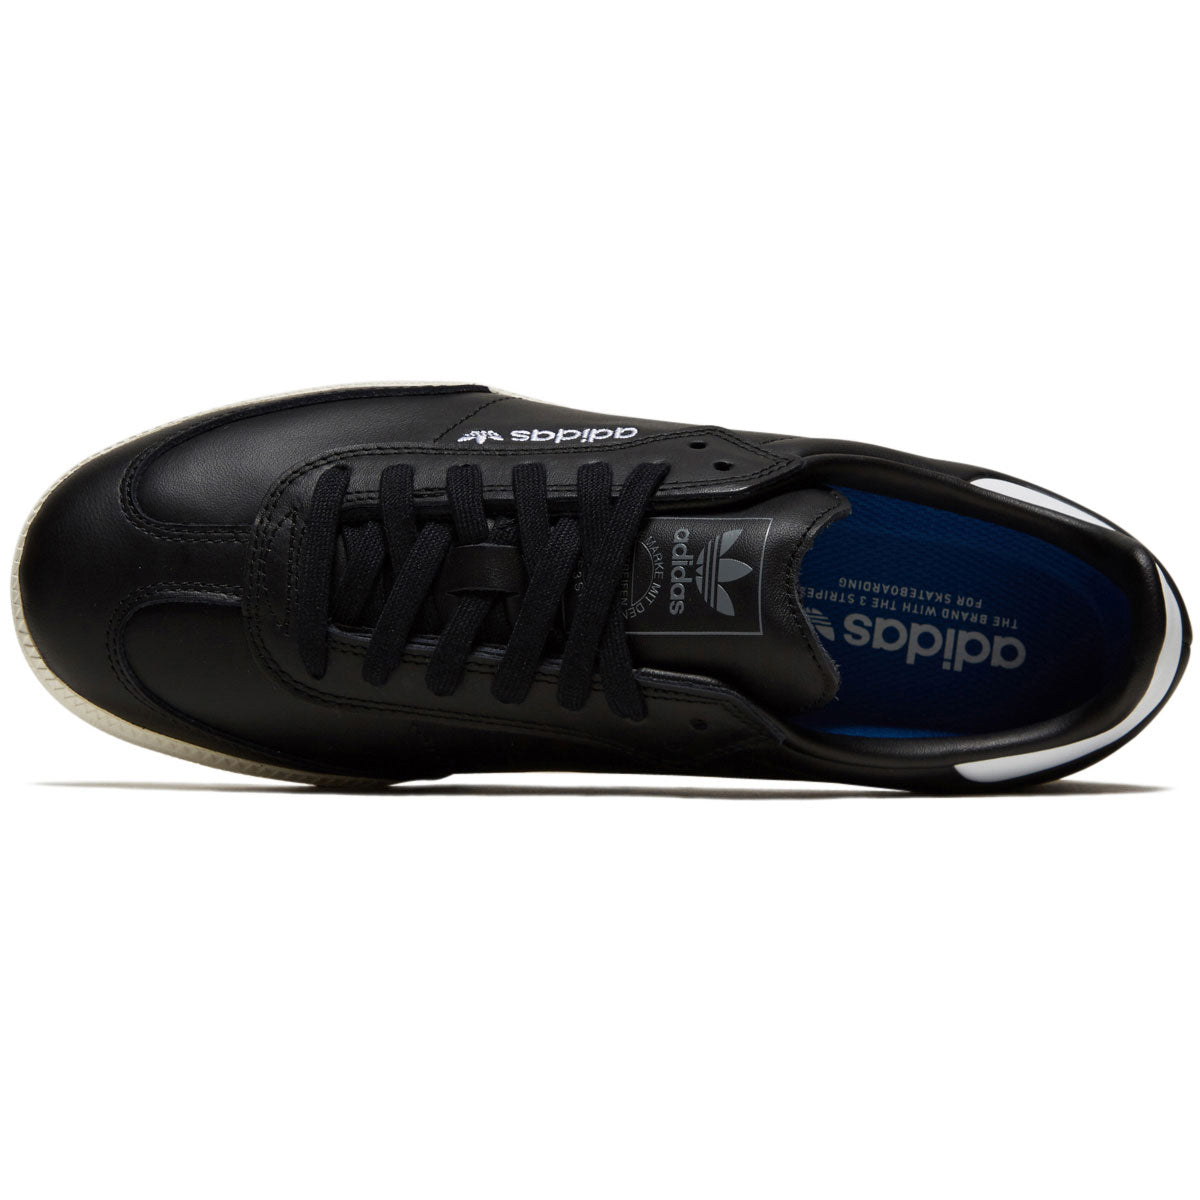 Adidas Samba ADV Shoes - Core Black/Grey/Chalk White image 3